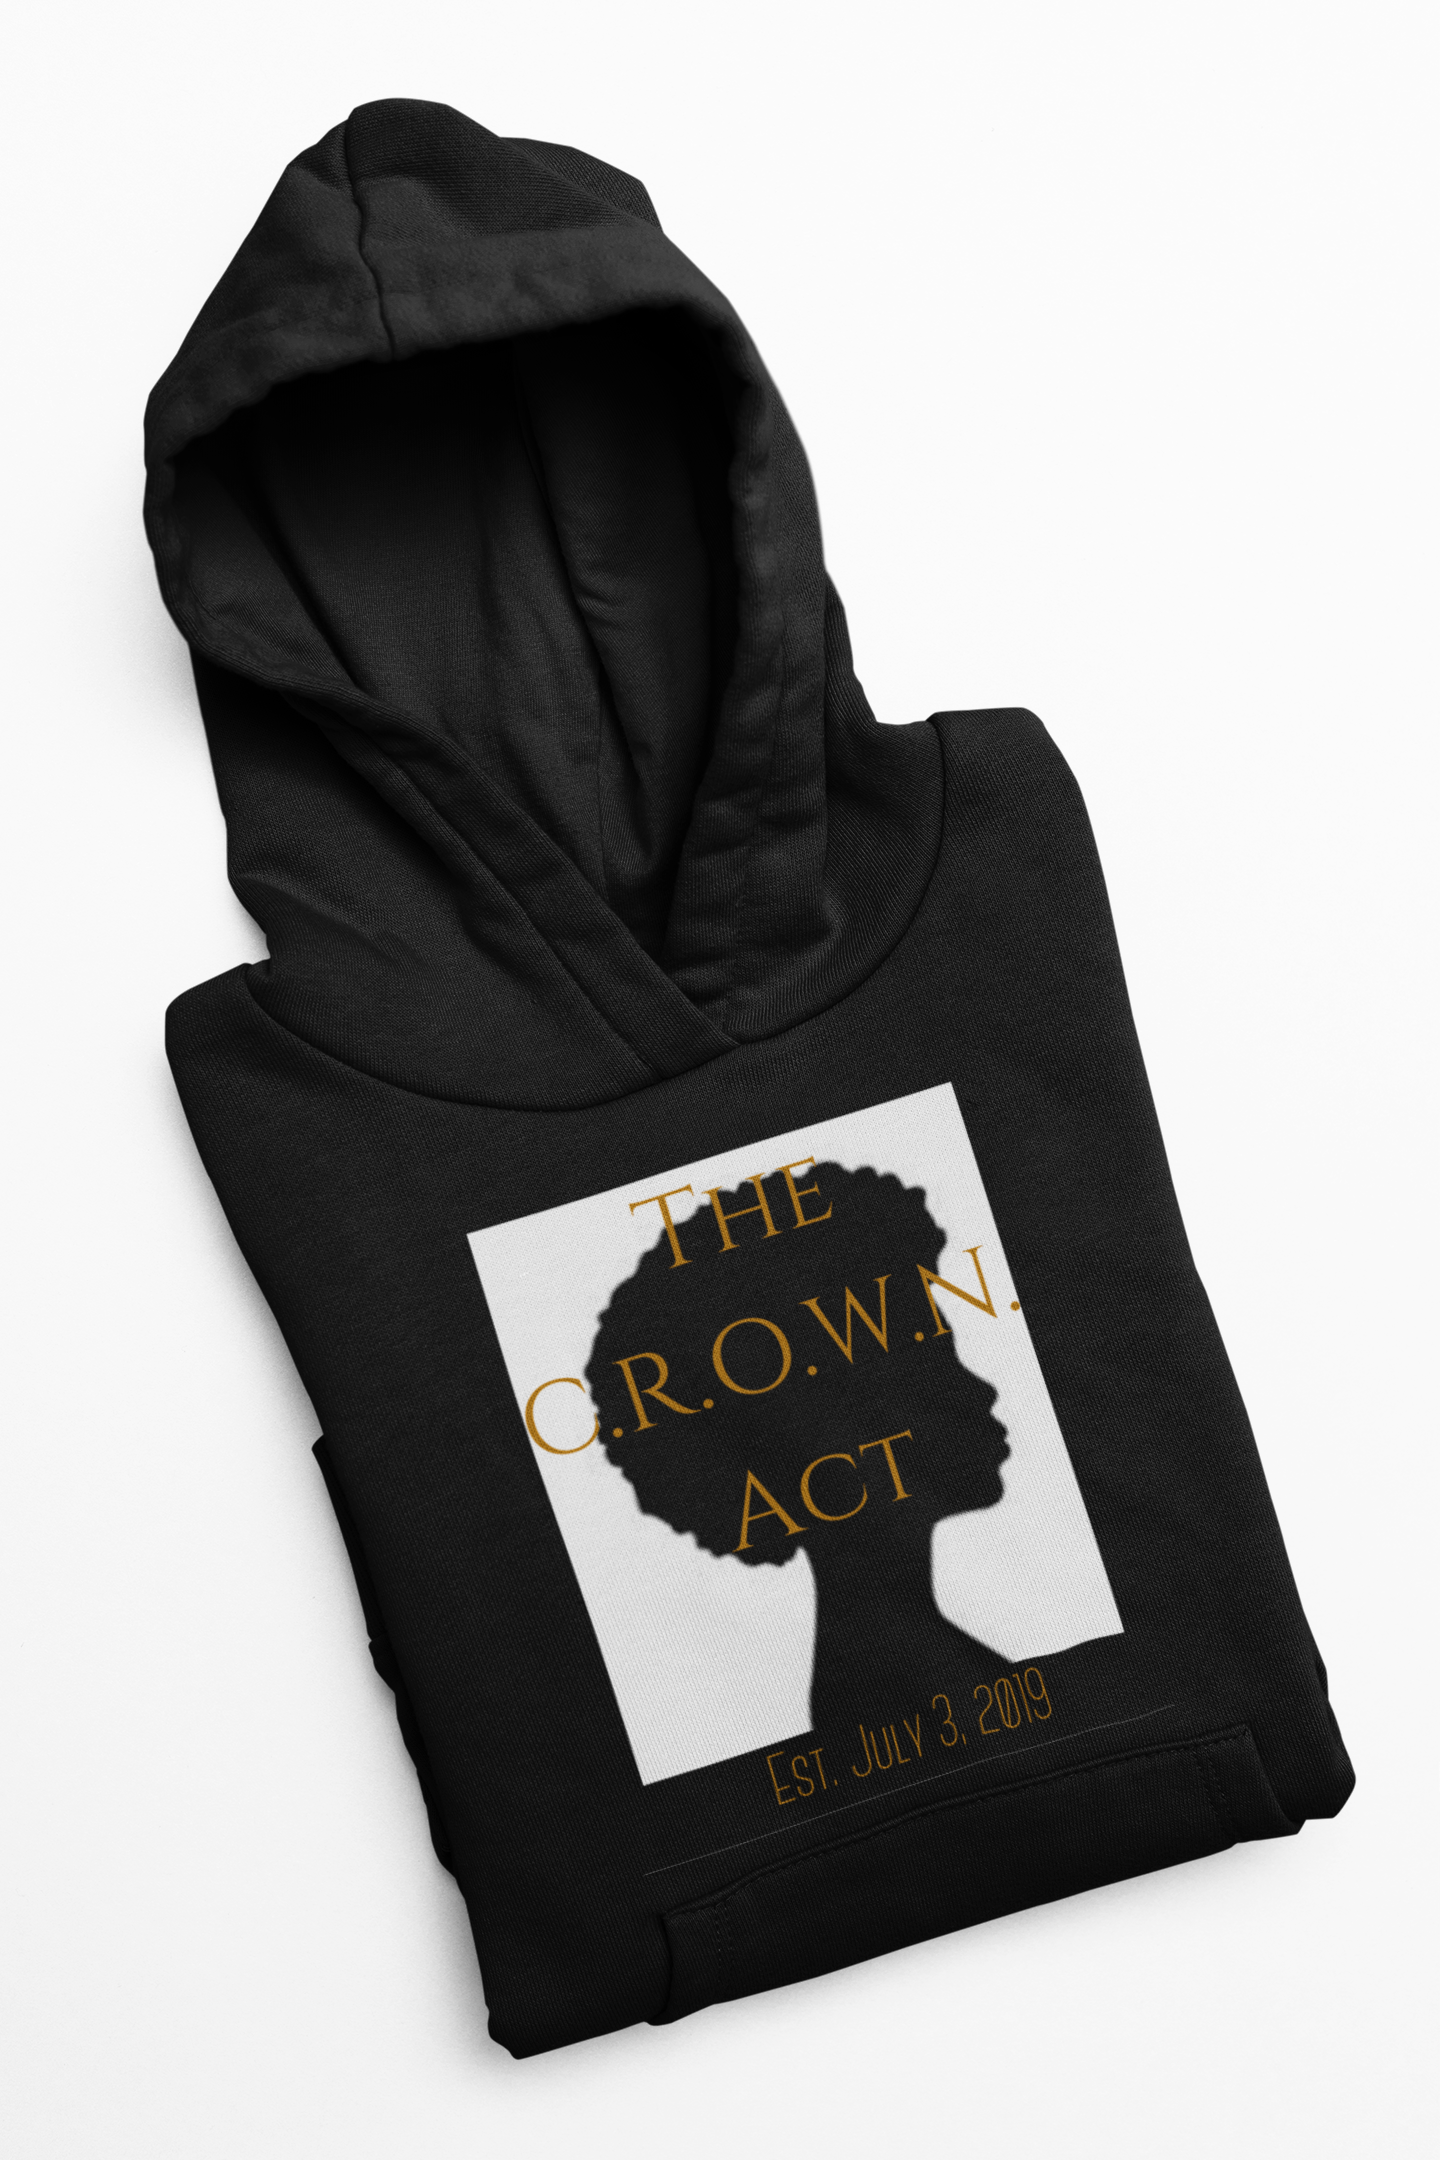 The Crown Act Hoodie.